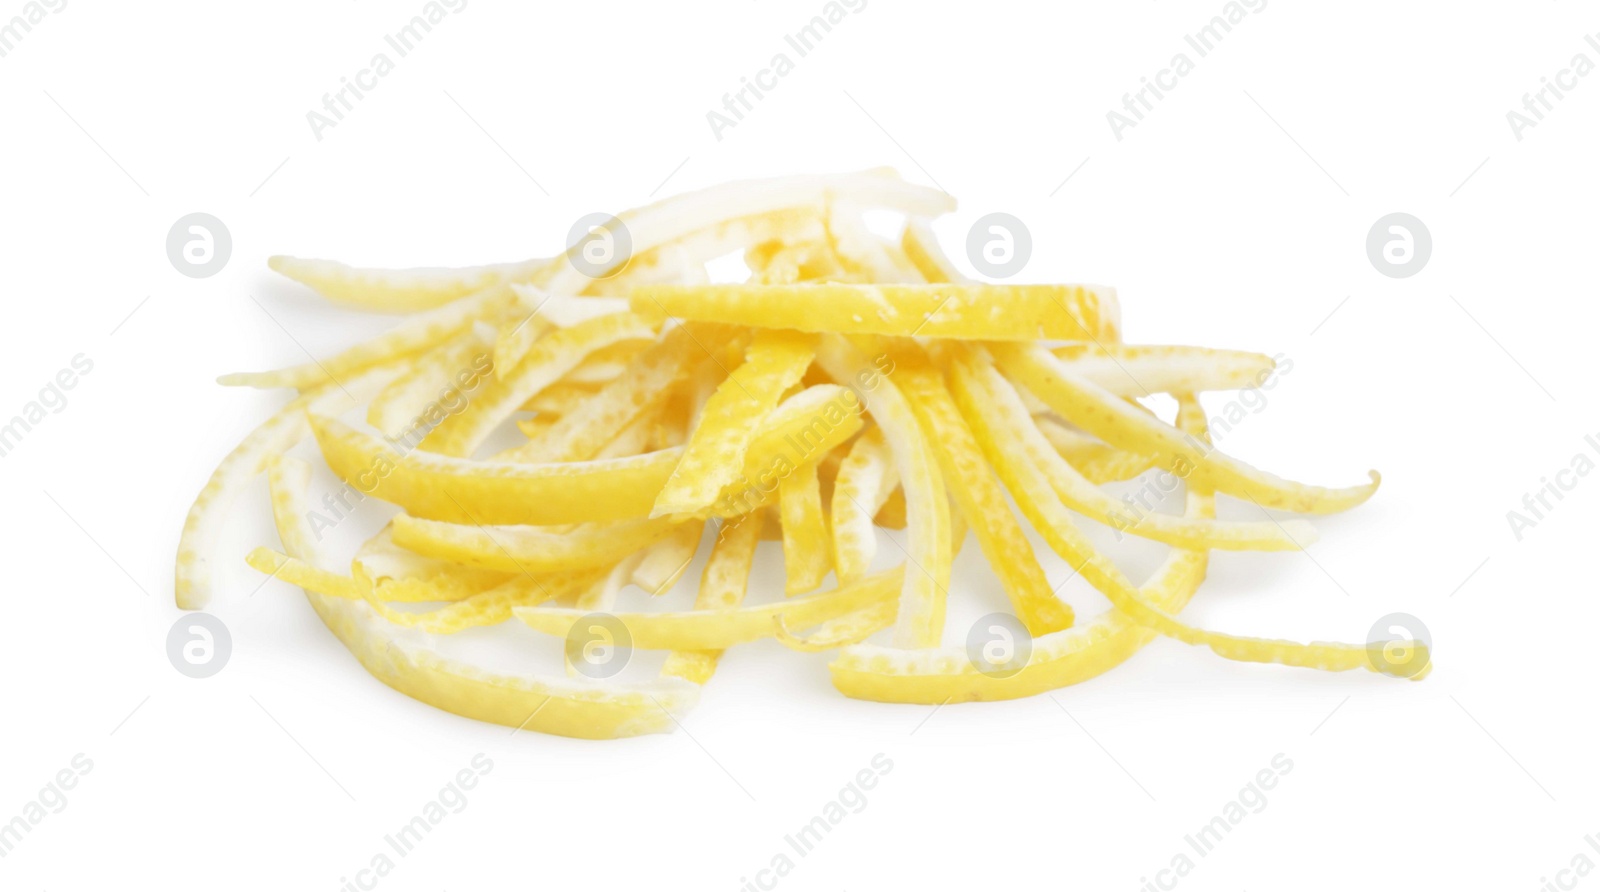 Photo of Pieces of fresh lemon peel on white background. Citrus zest